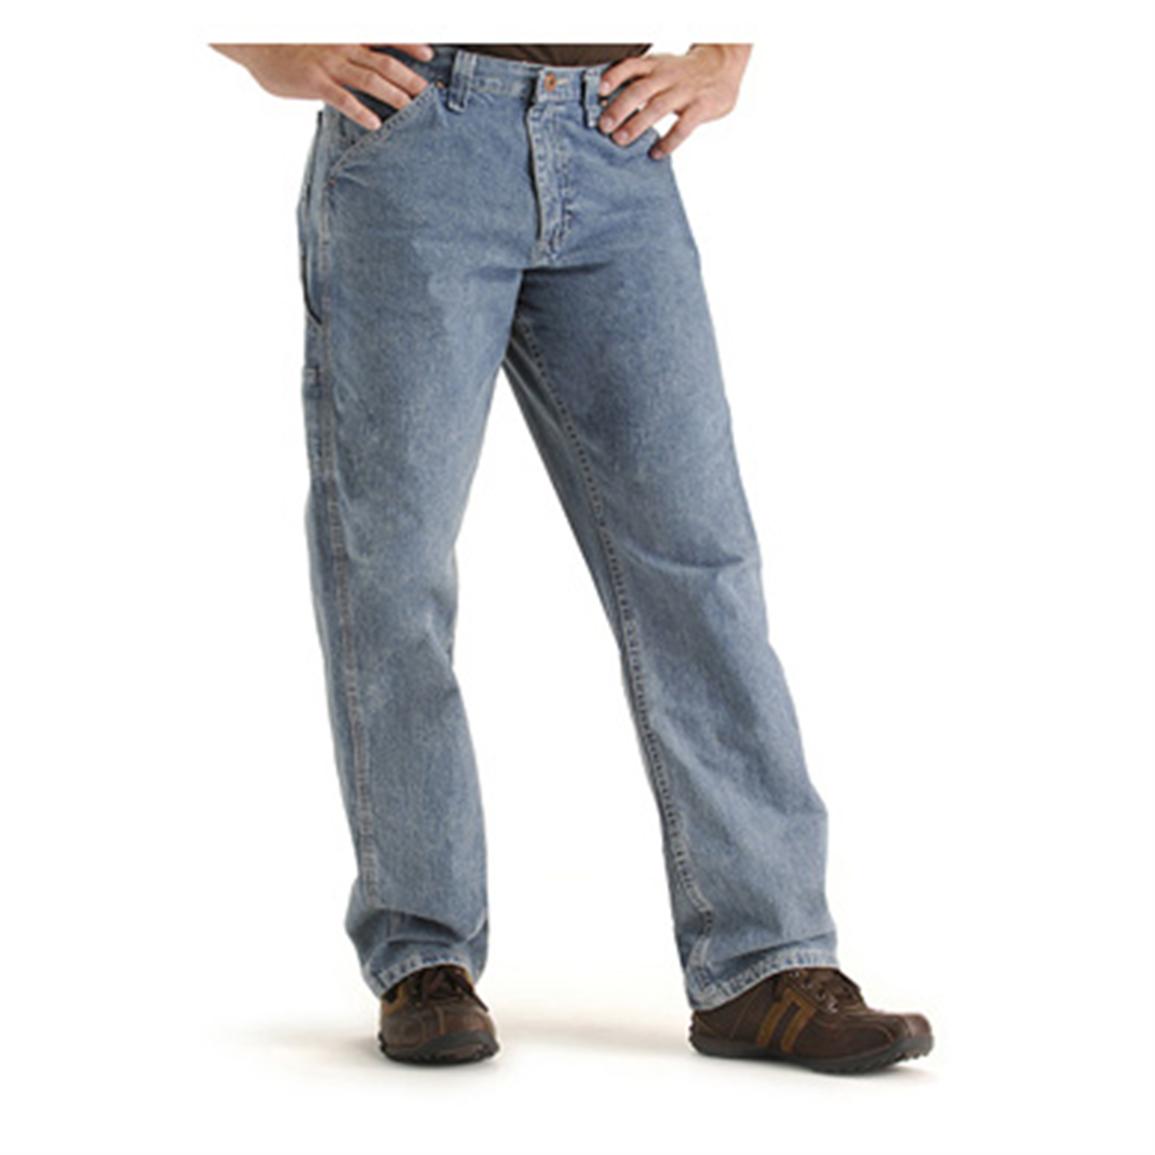 Lee® Carpenter Jeans - 226688, Jeans & Pants at Sportsman's Guide